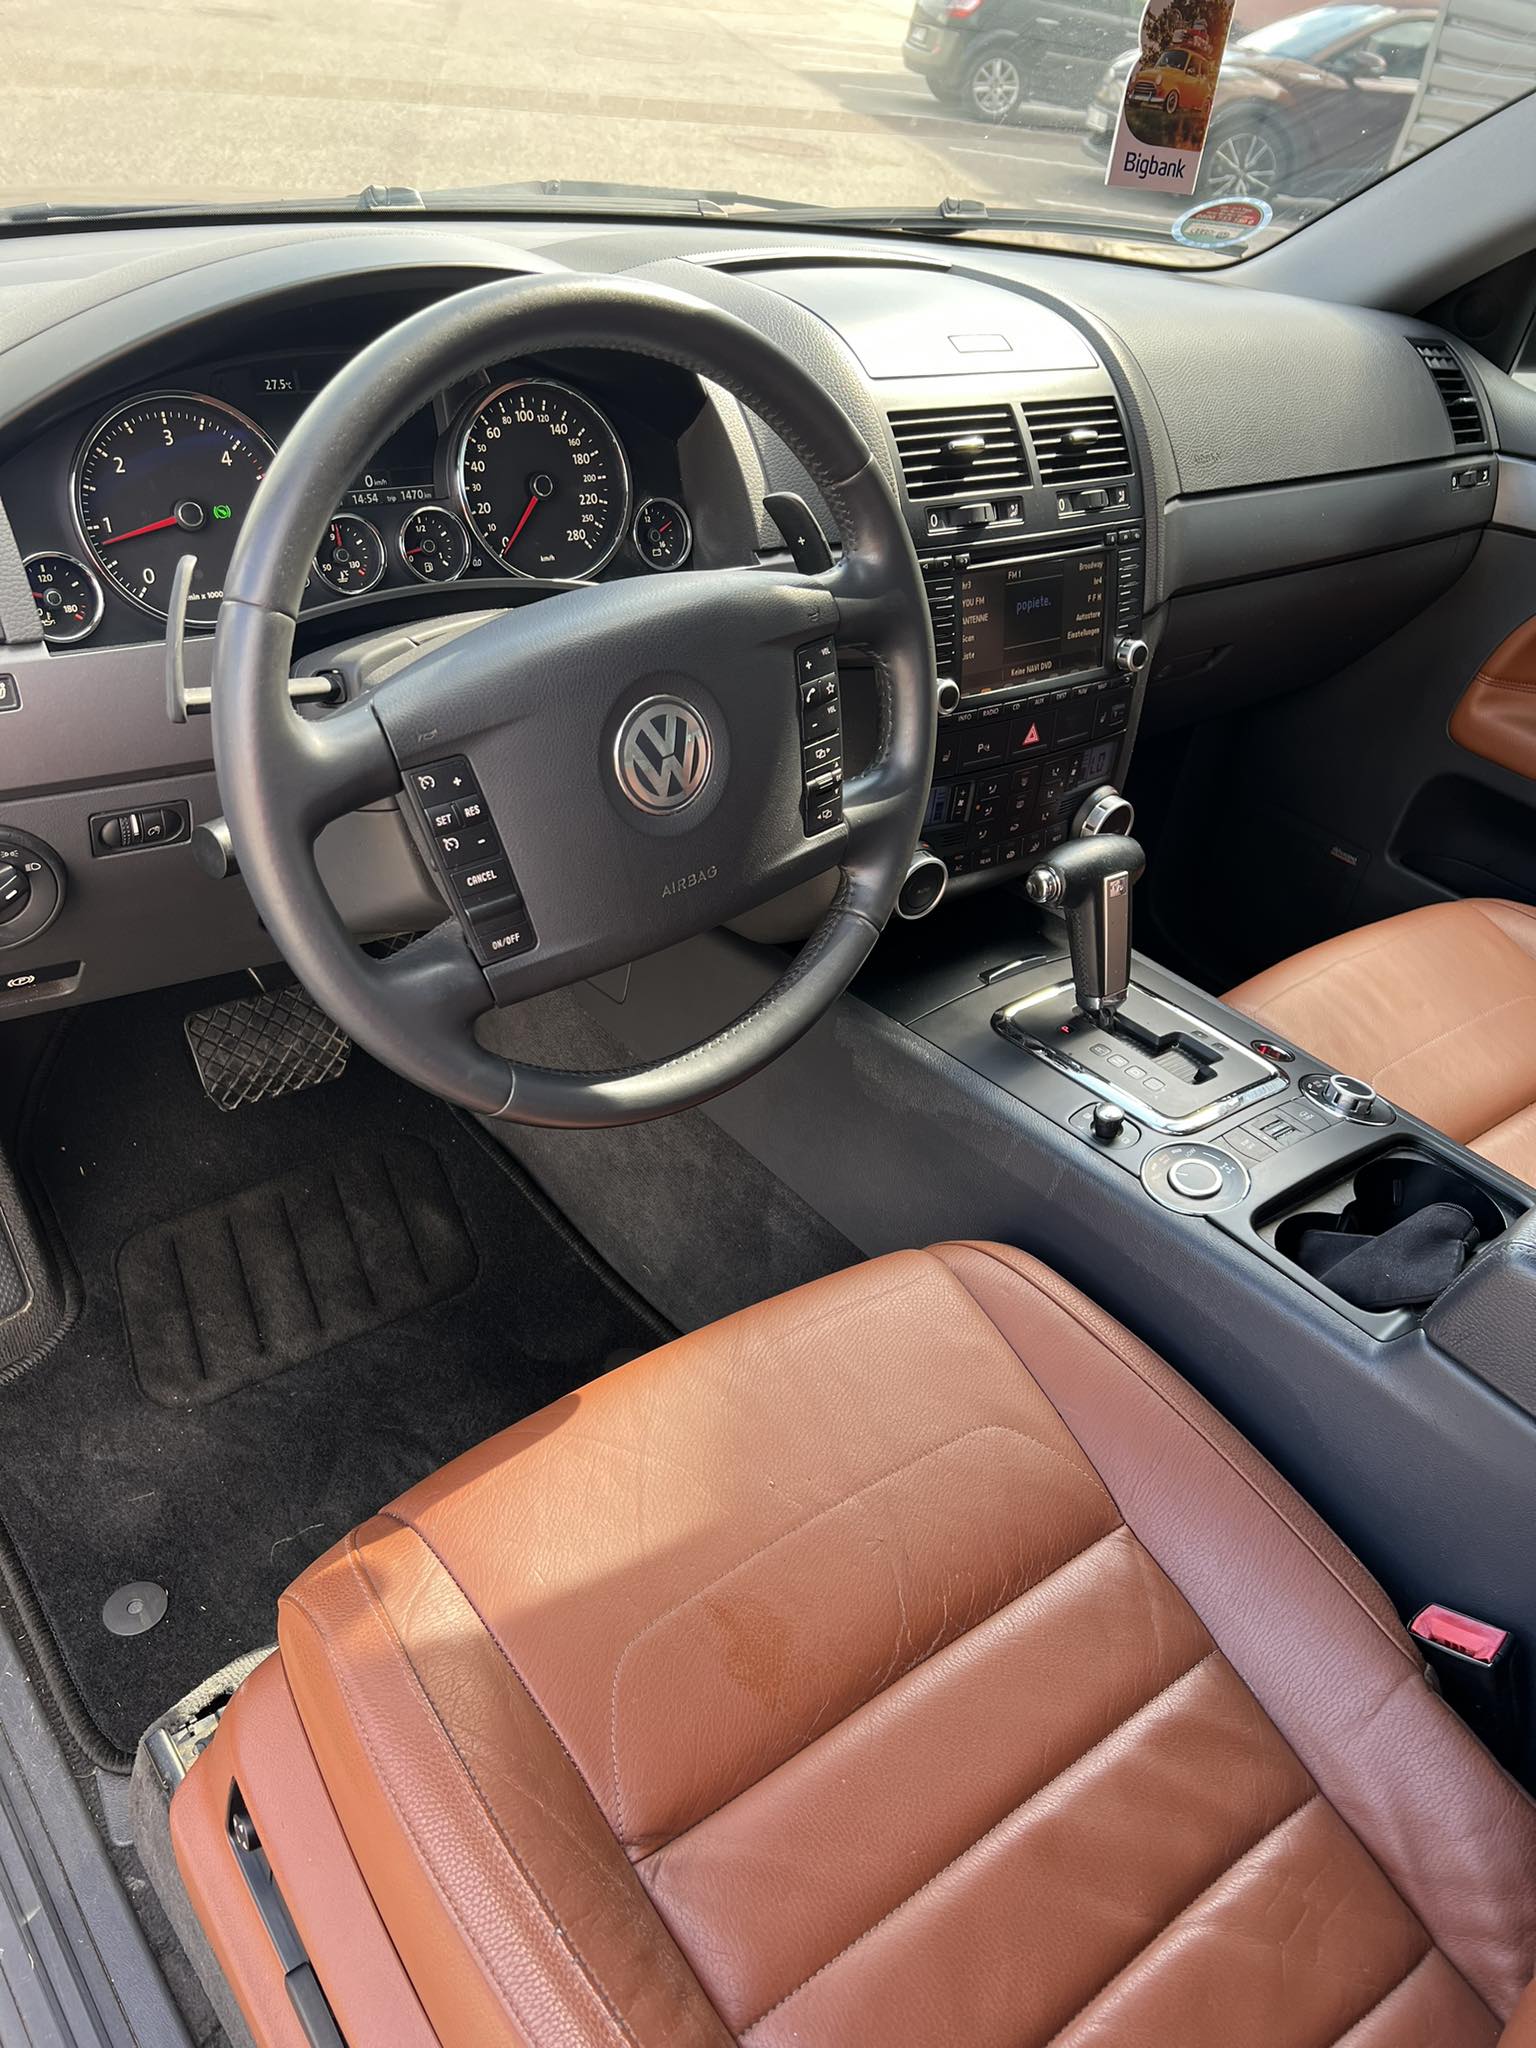 Volkswagen Touareg 3.0l., visureigis